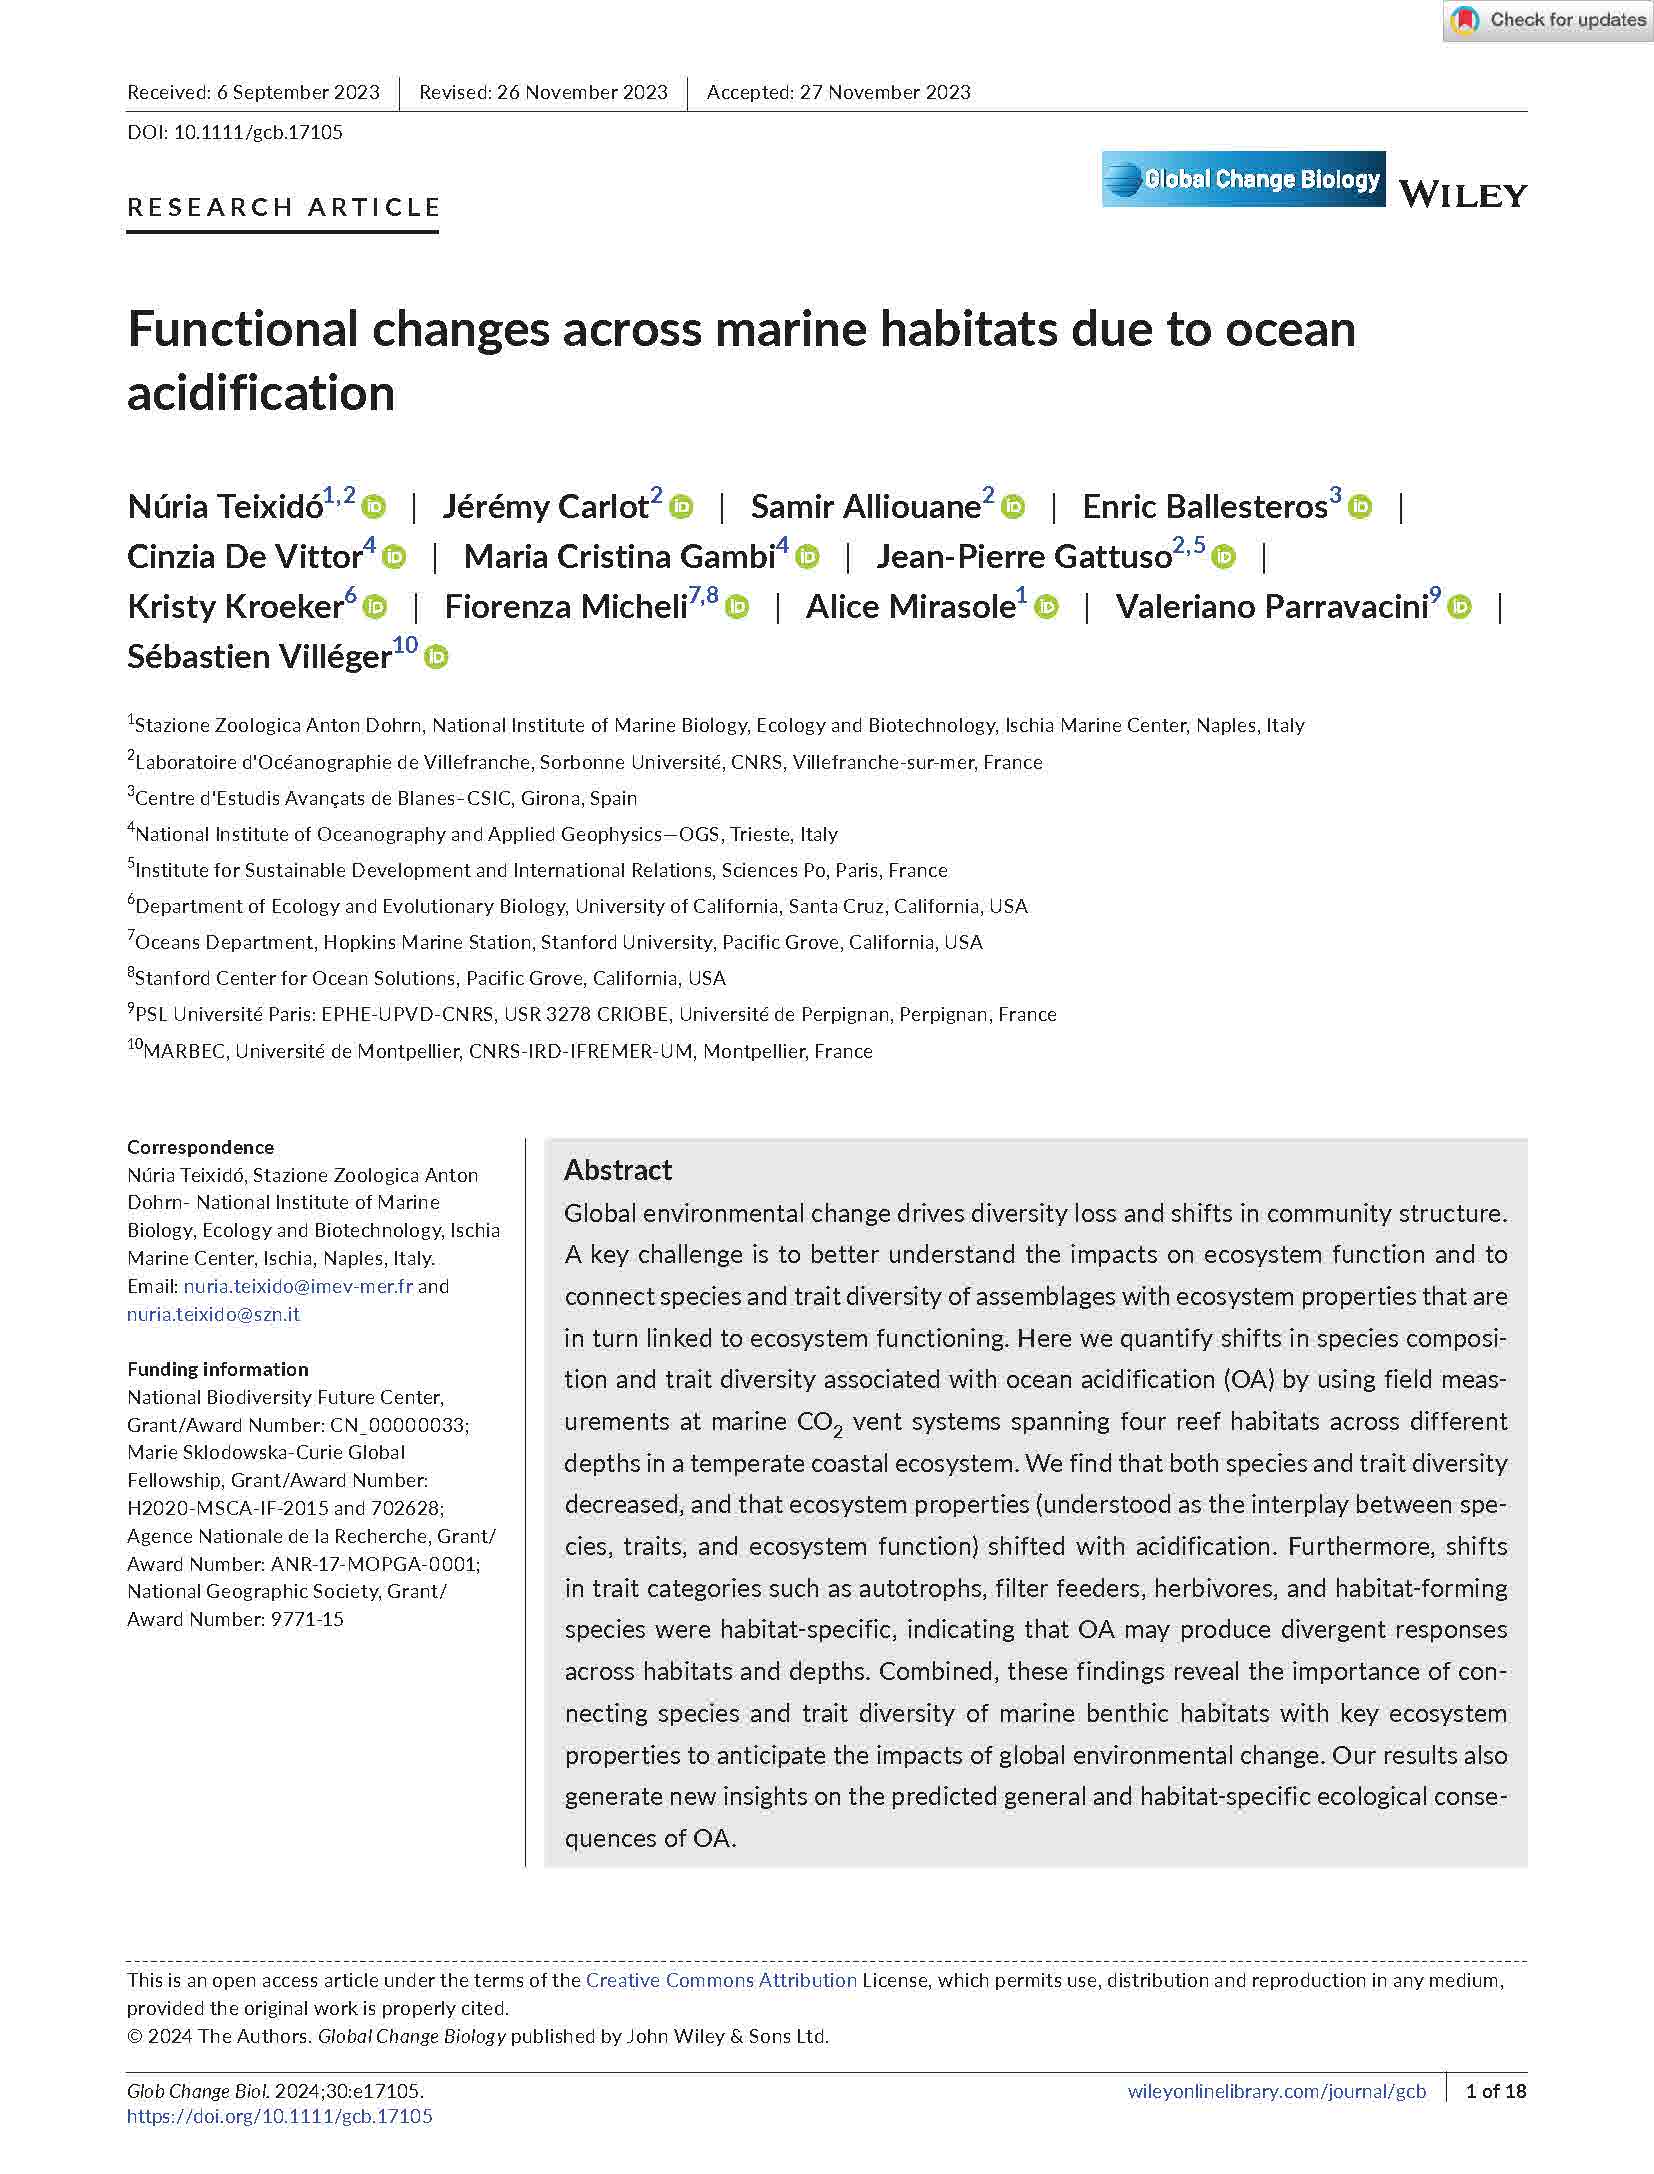 Teixidó et al 2024 Functional changes across marine habitats due to ocean acidification GCB